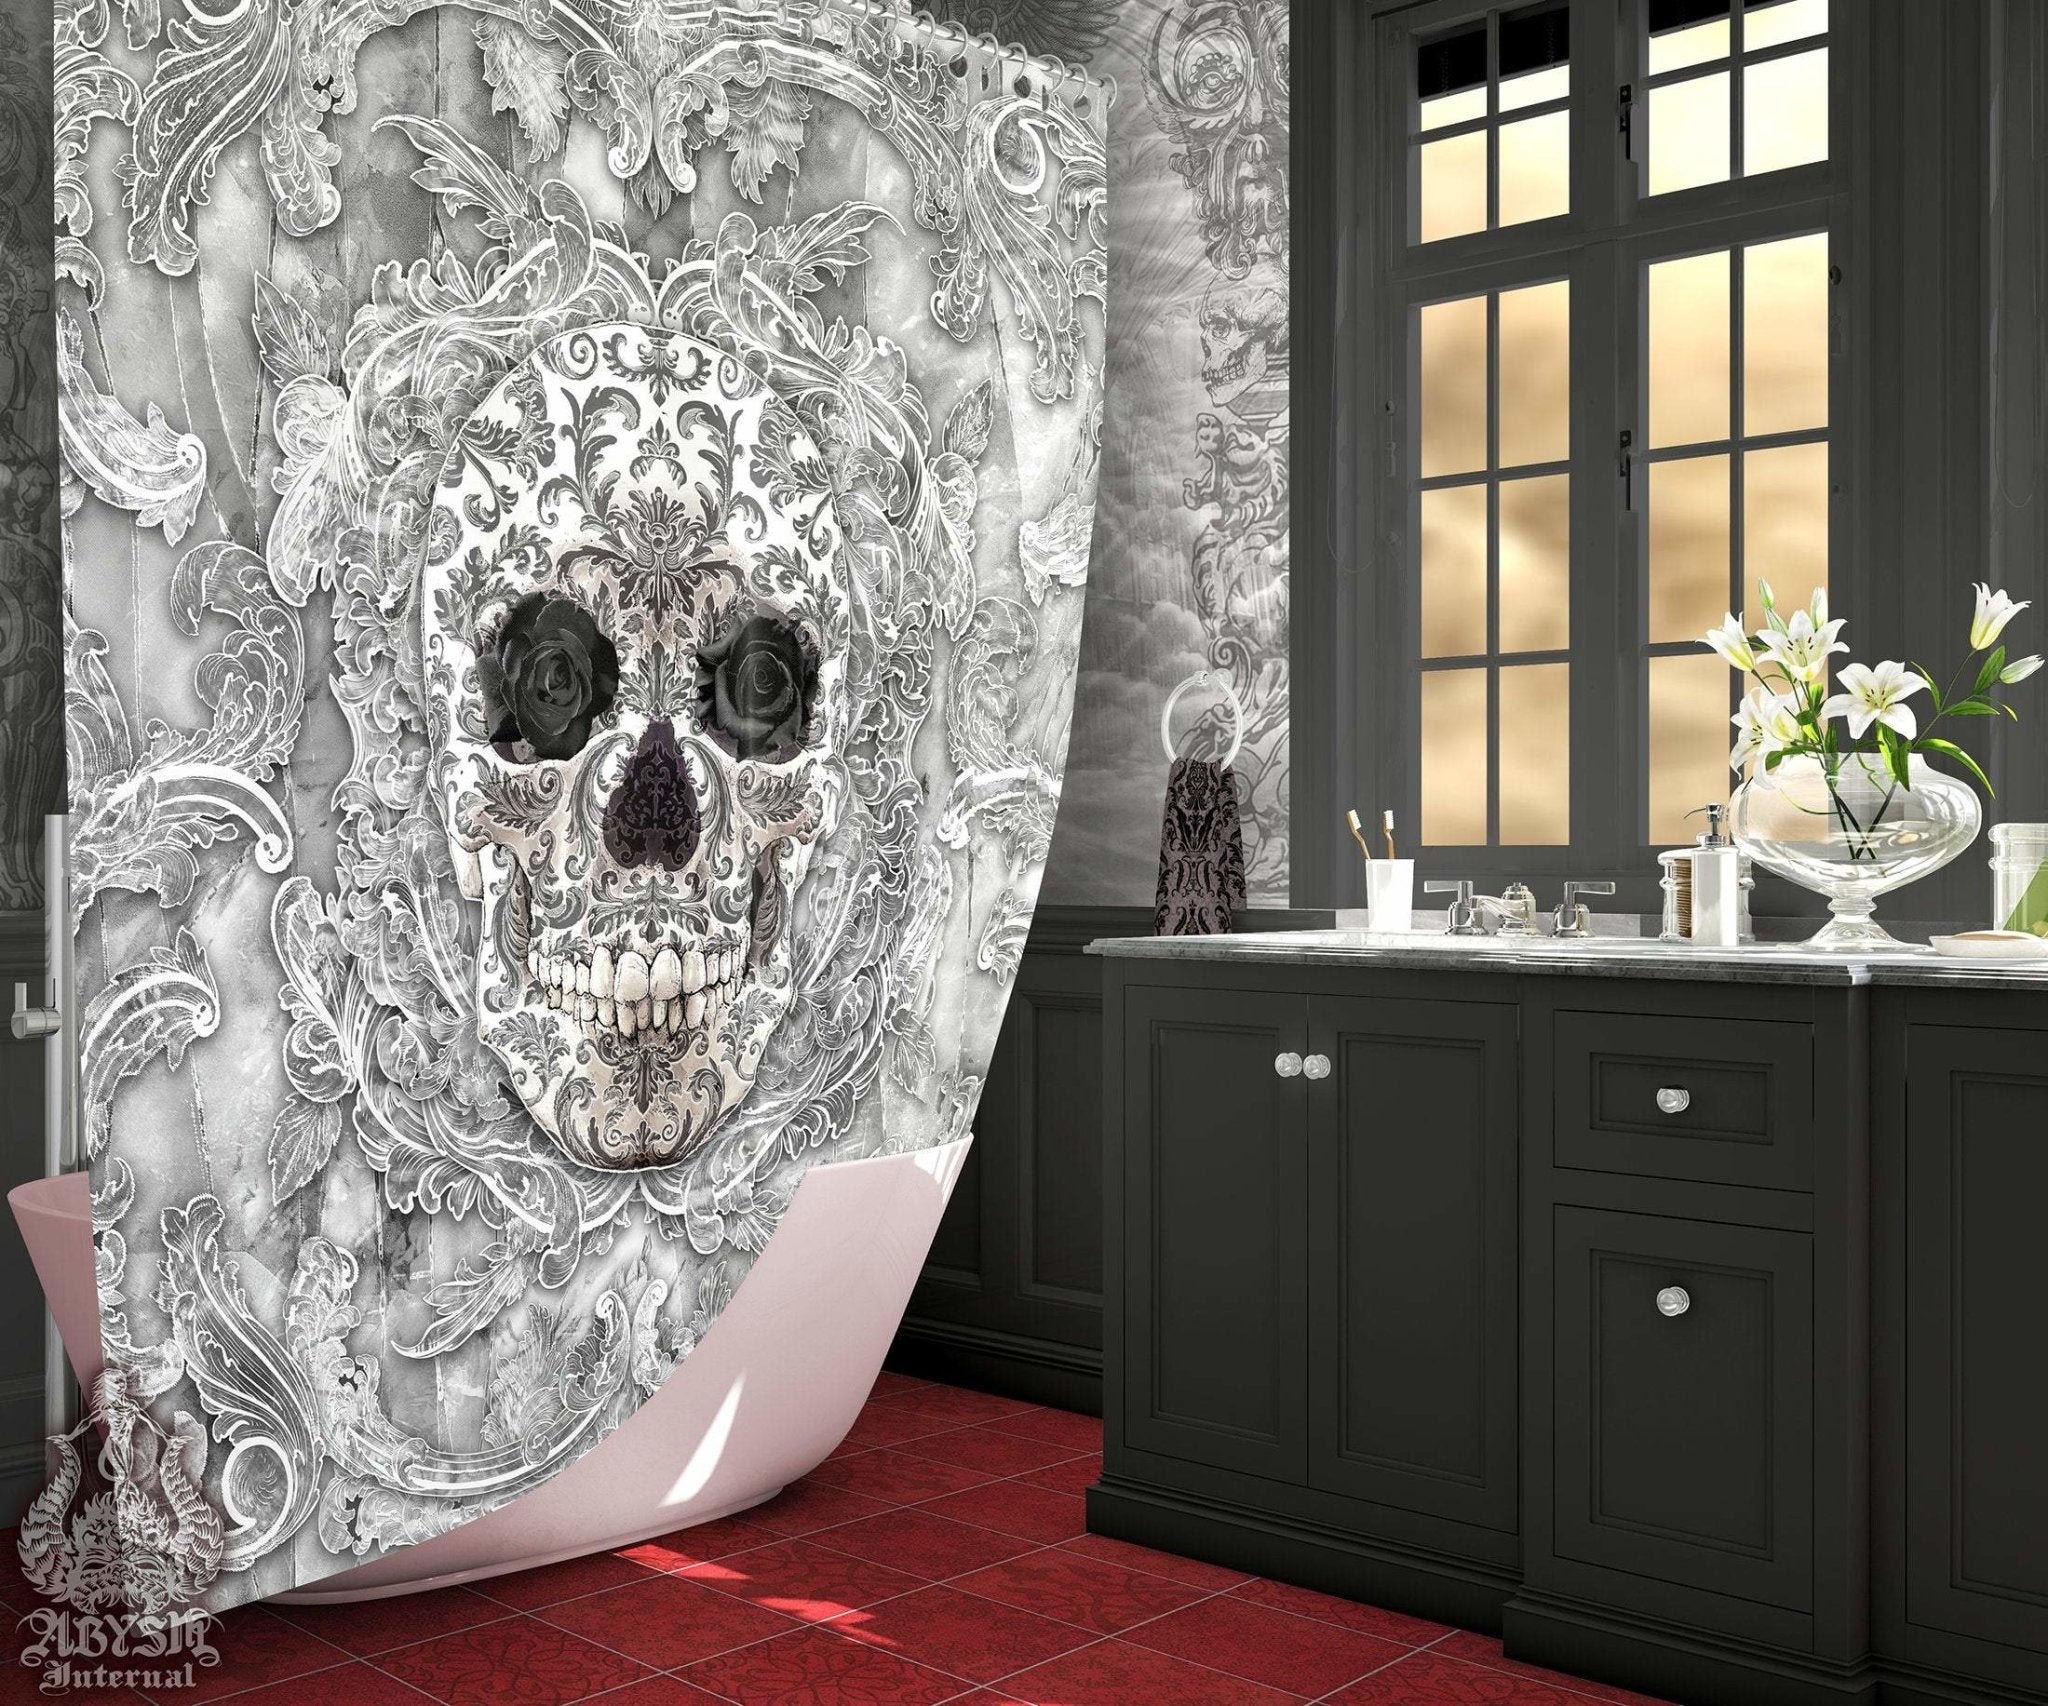 White Goth Shower Curtain, Gothic Bathroom Decor, Skull, Macabre Art - Stone - Abysm Internal